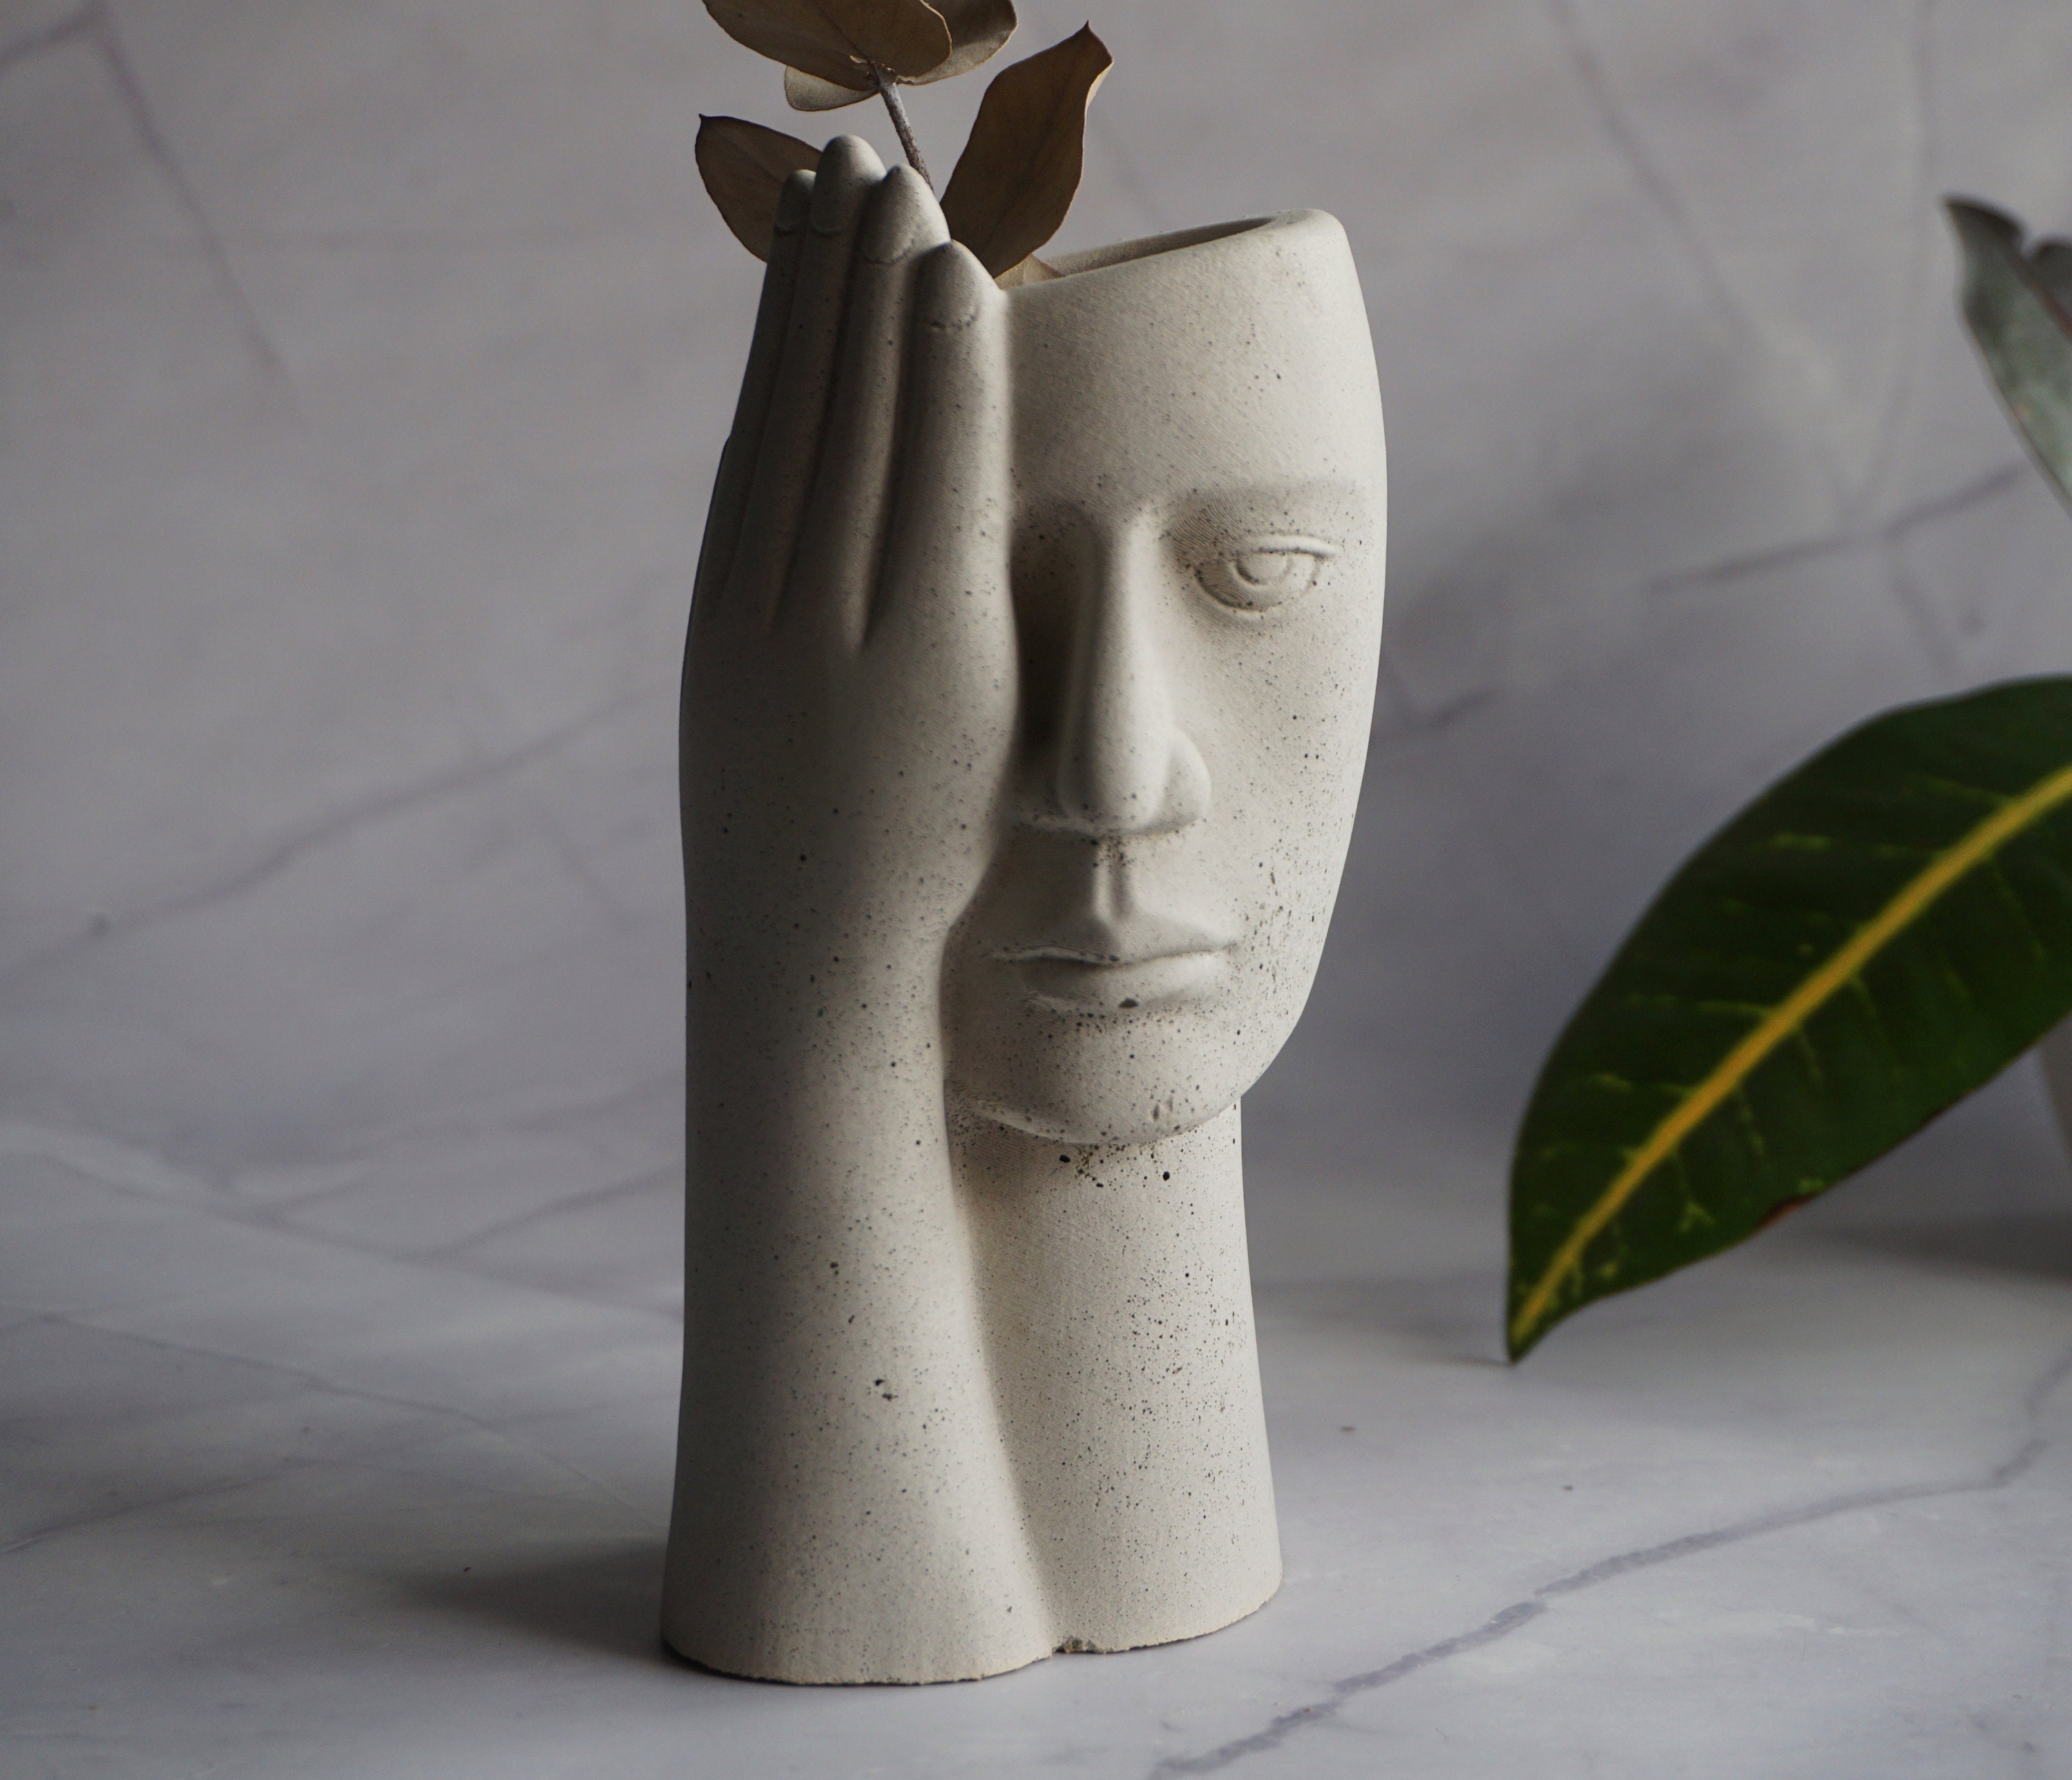 Abstract Human Face Ceramic Vase Northern European Body Art